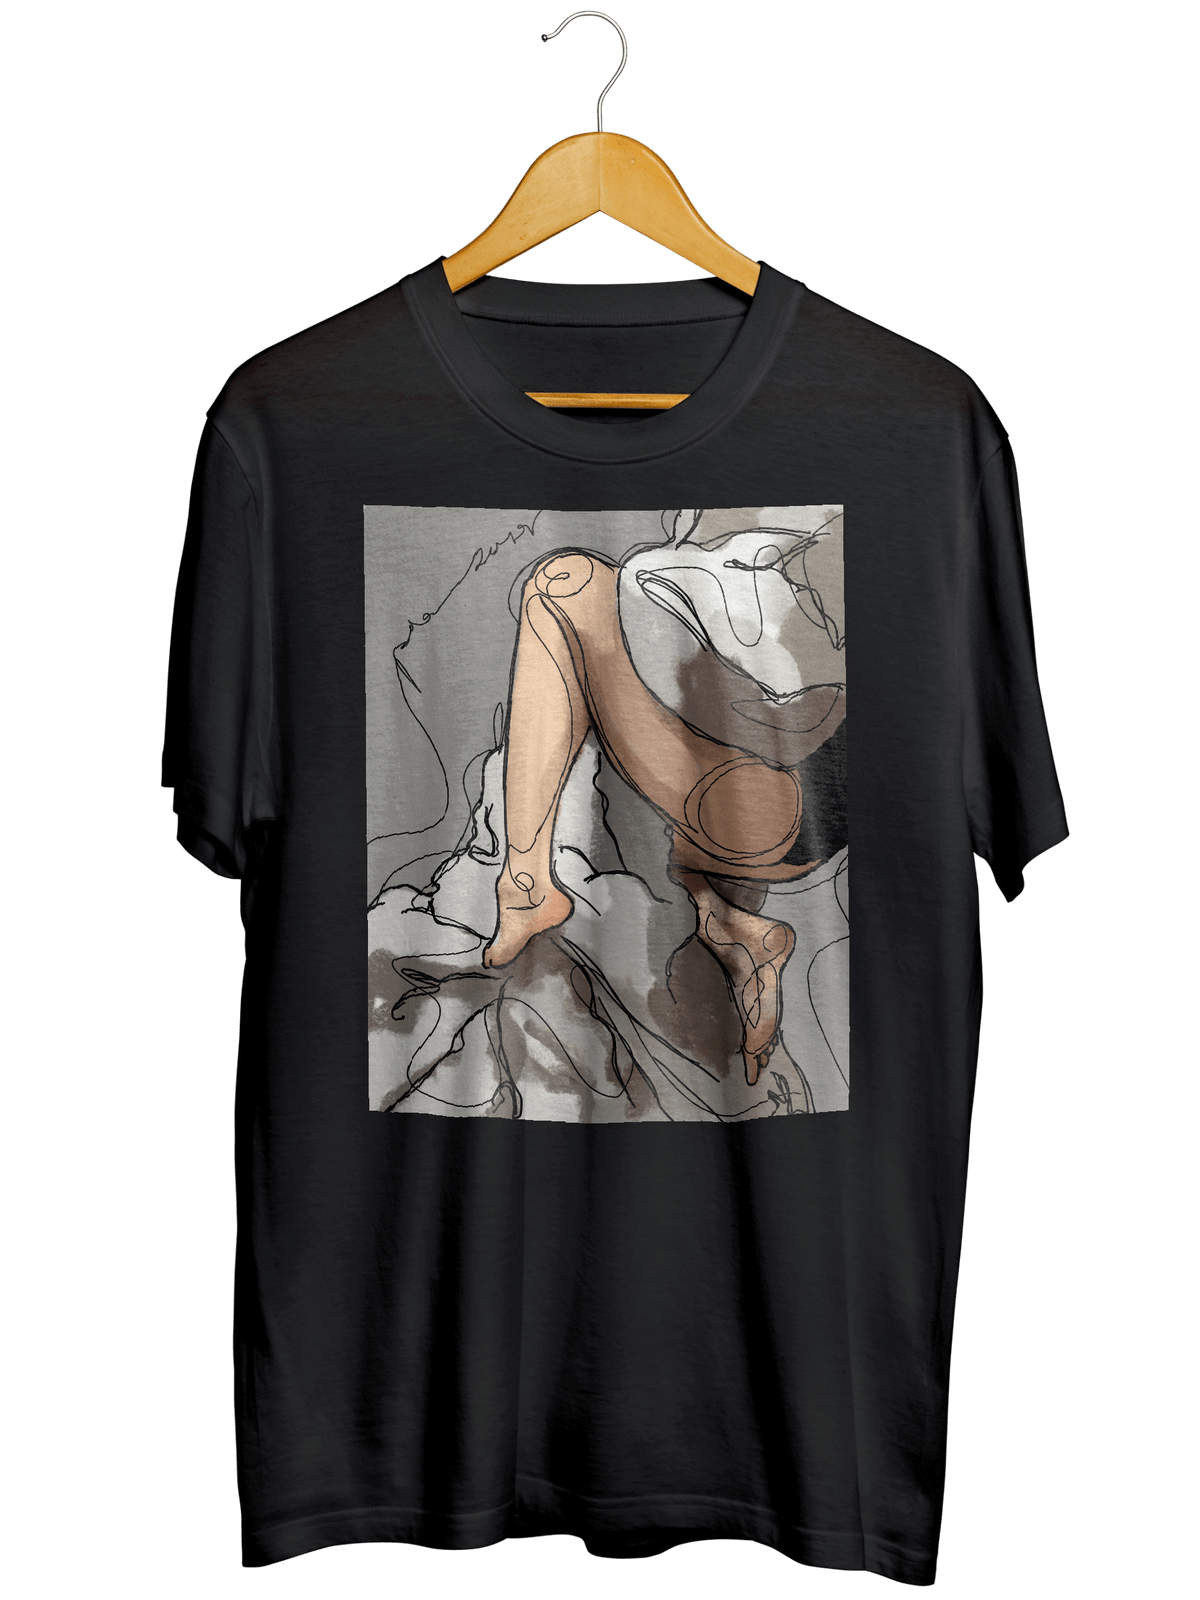 artonclothes Artshop Clothing clothing brand clothing store eshop eshop design Fashion  t-shirt visual design